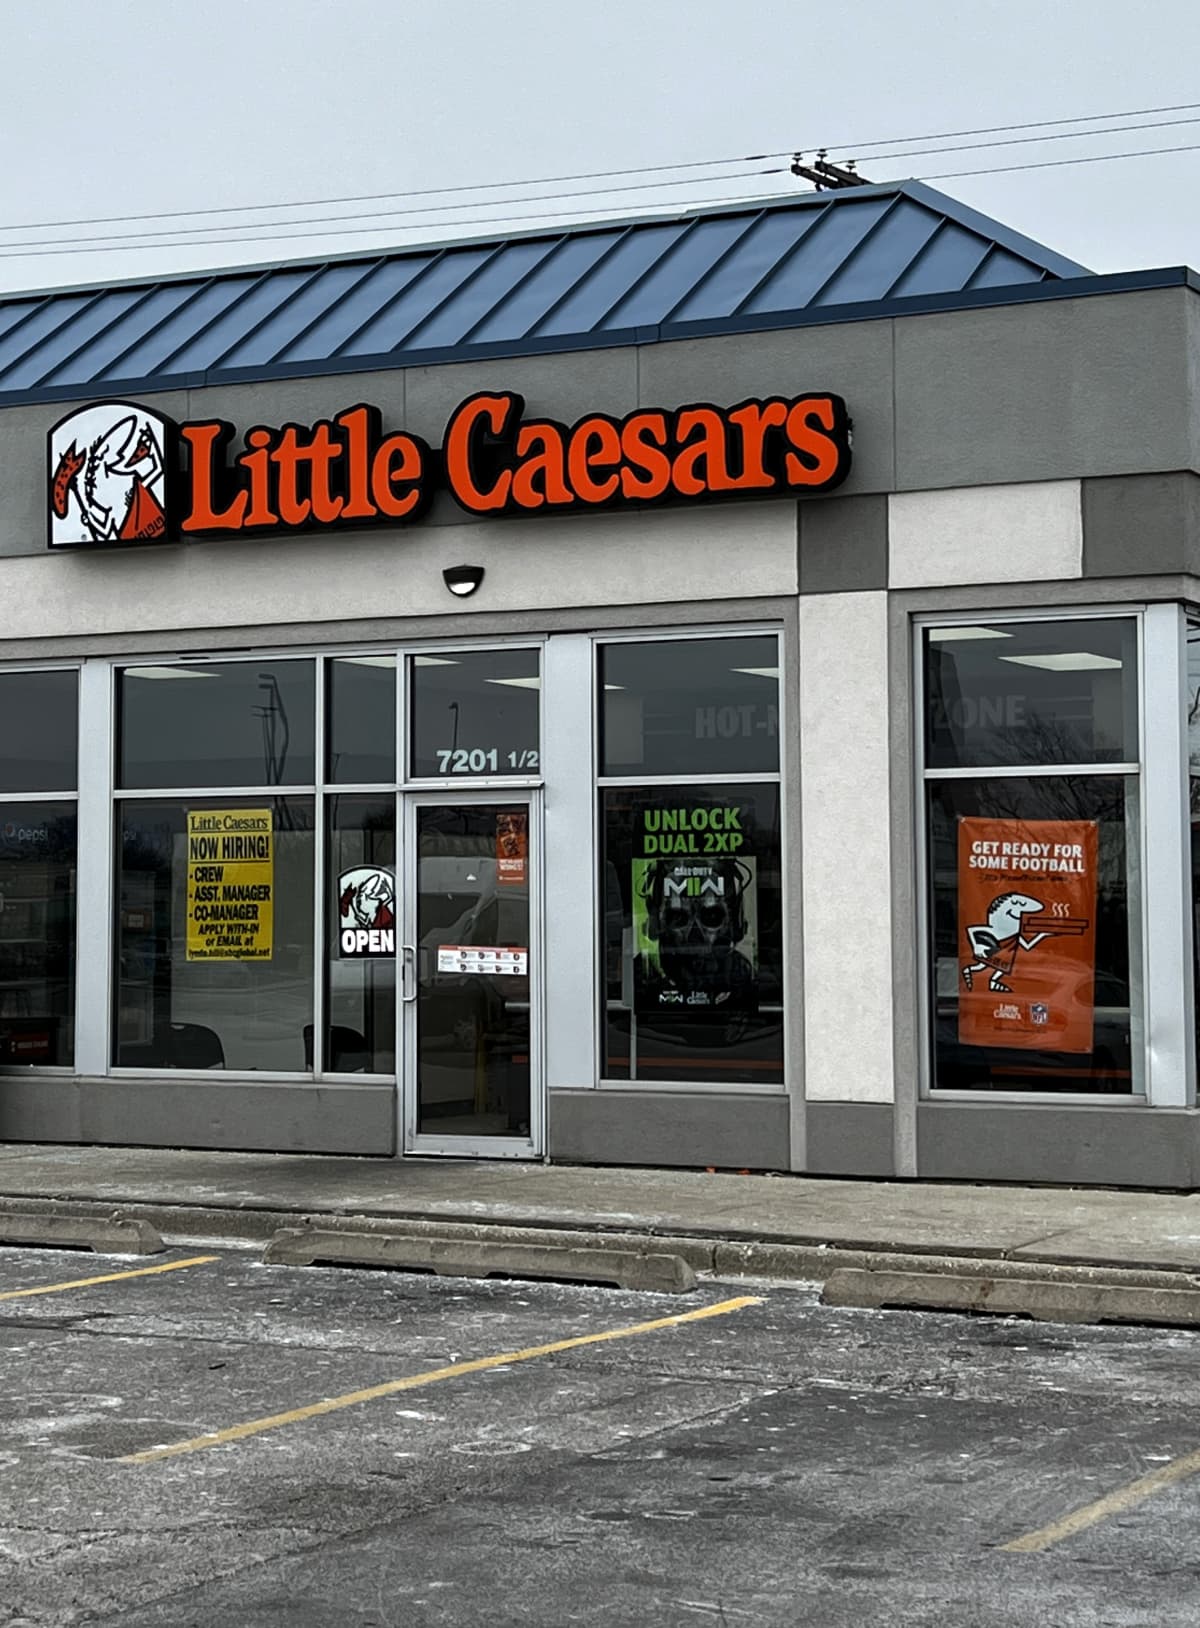 Exterior of Little Caesars pizza restaurant location in Morton Grove, Illinois.